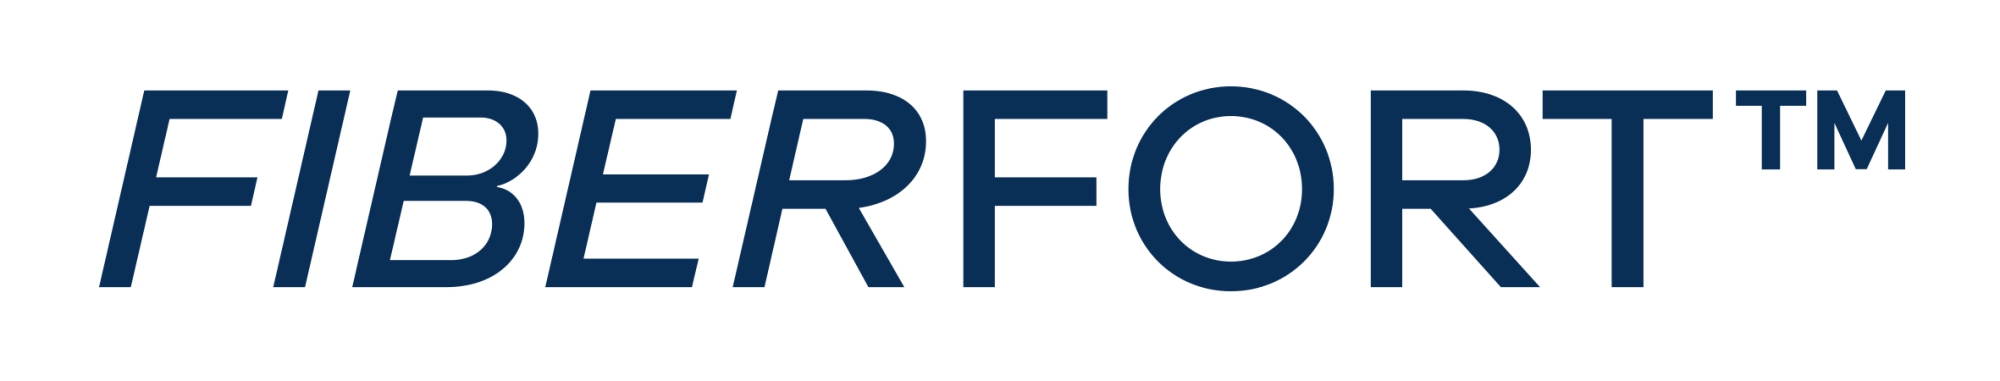 FiberFort_logo_DEF